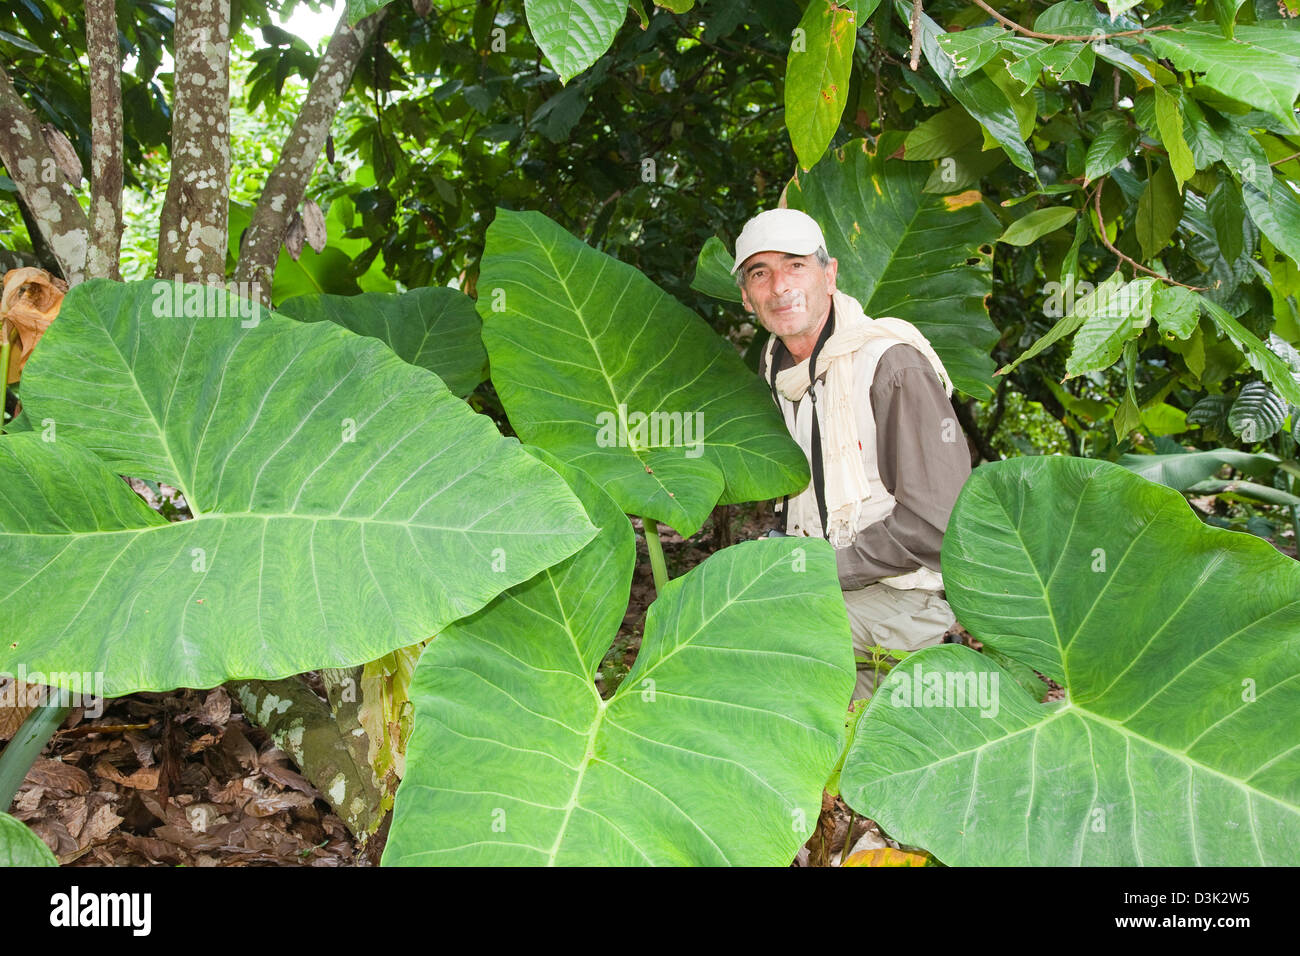 america, caribbean sea, hispaniola island, dominican republic, area of higuey, forest, huge, leaves Stock Photo